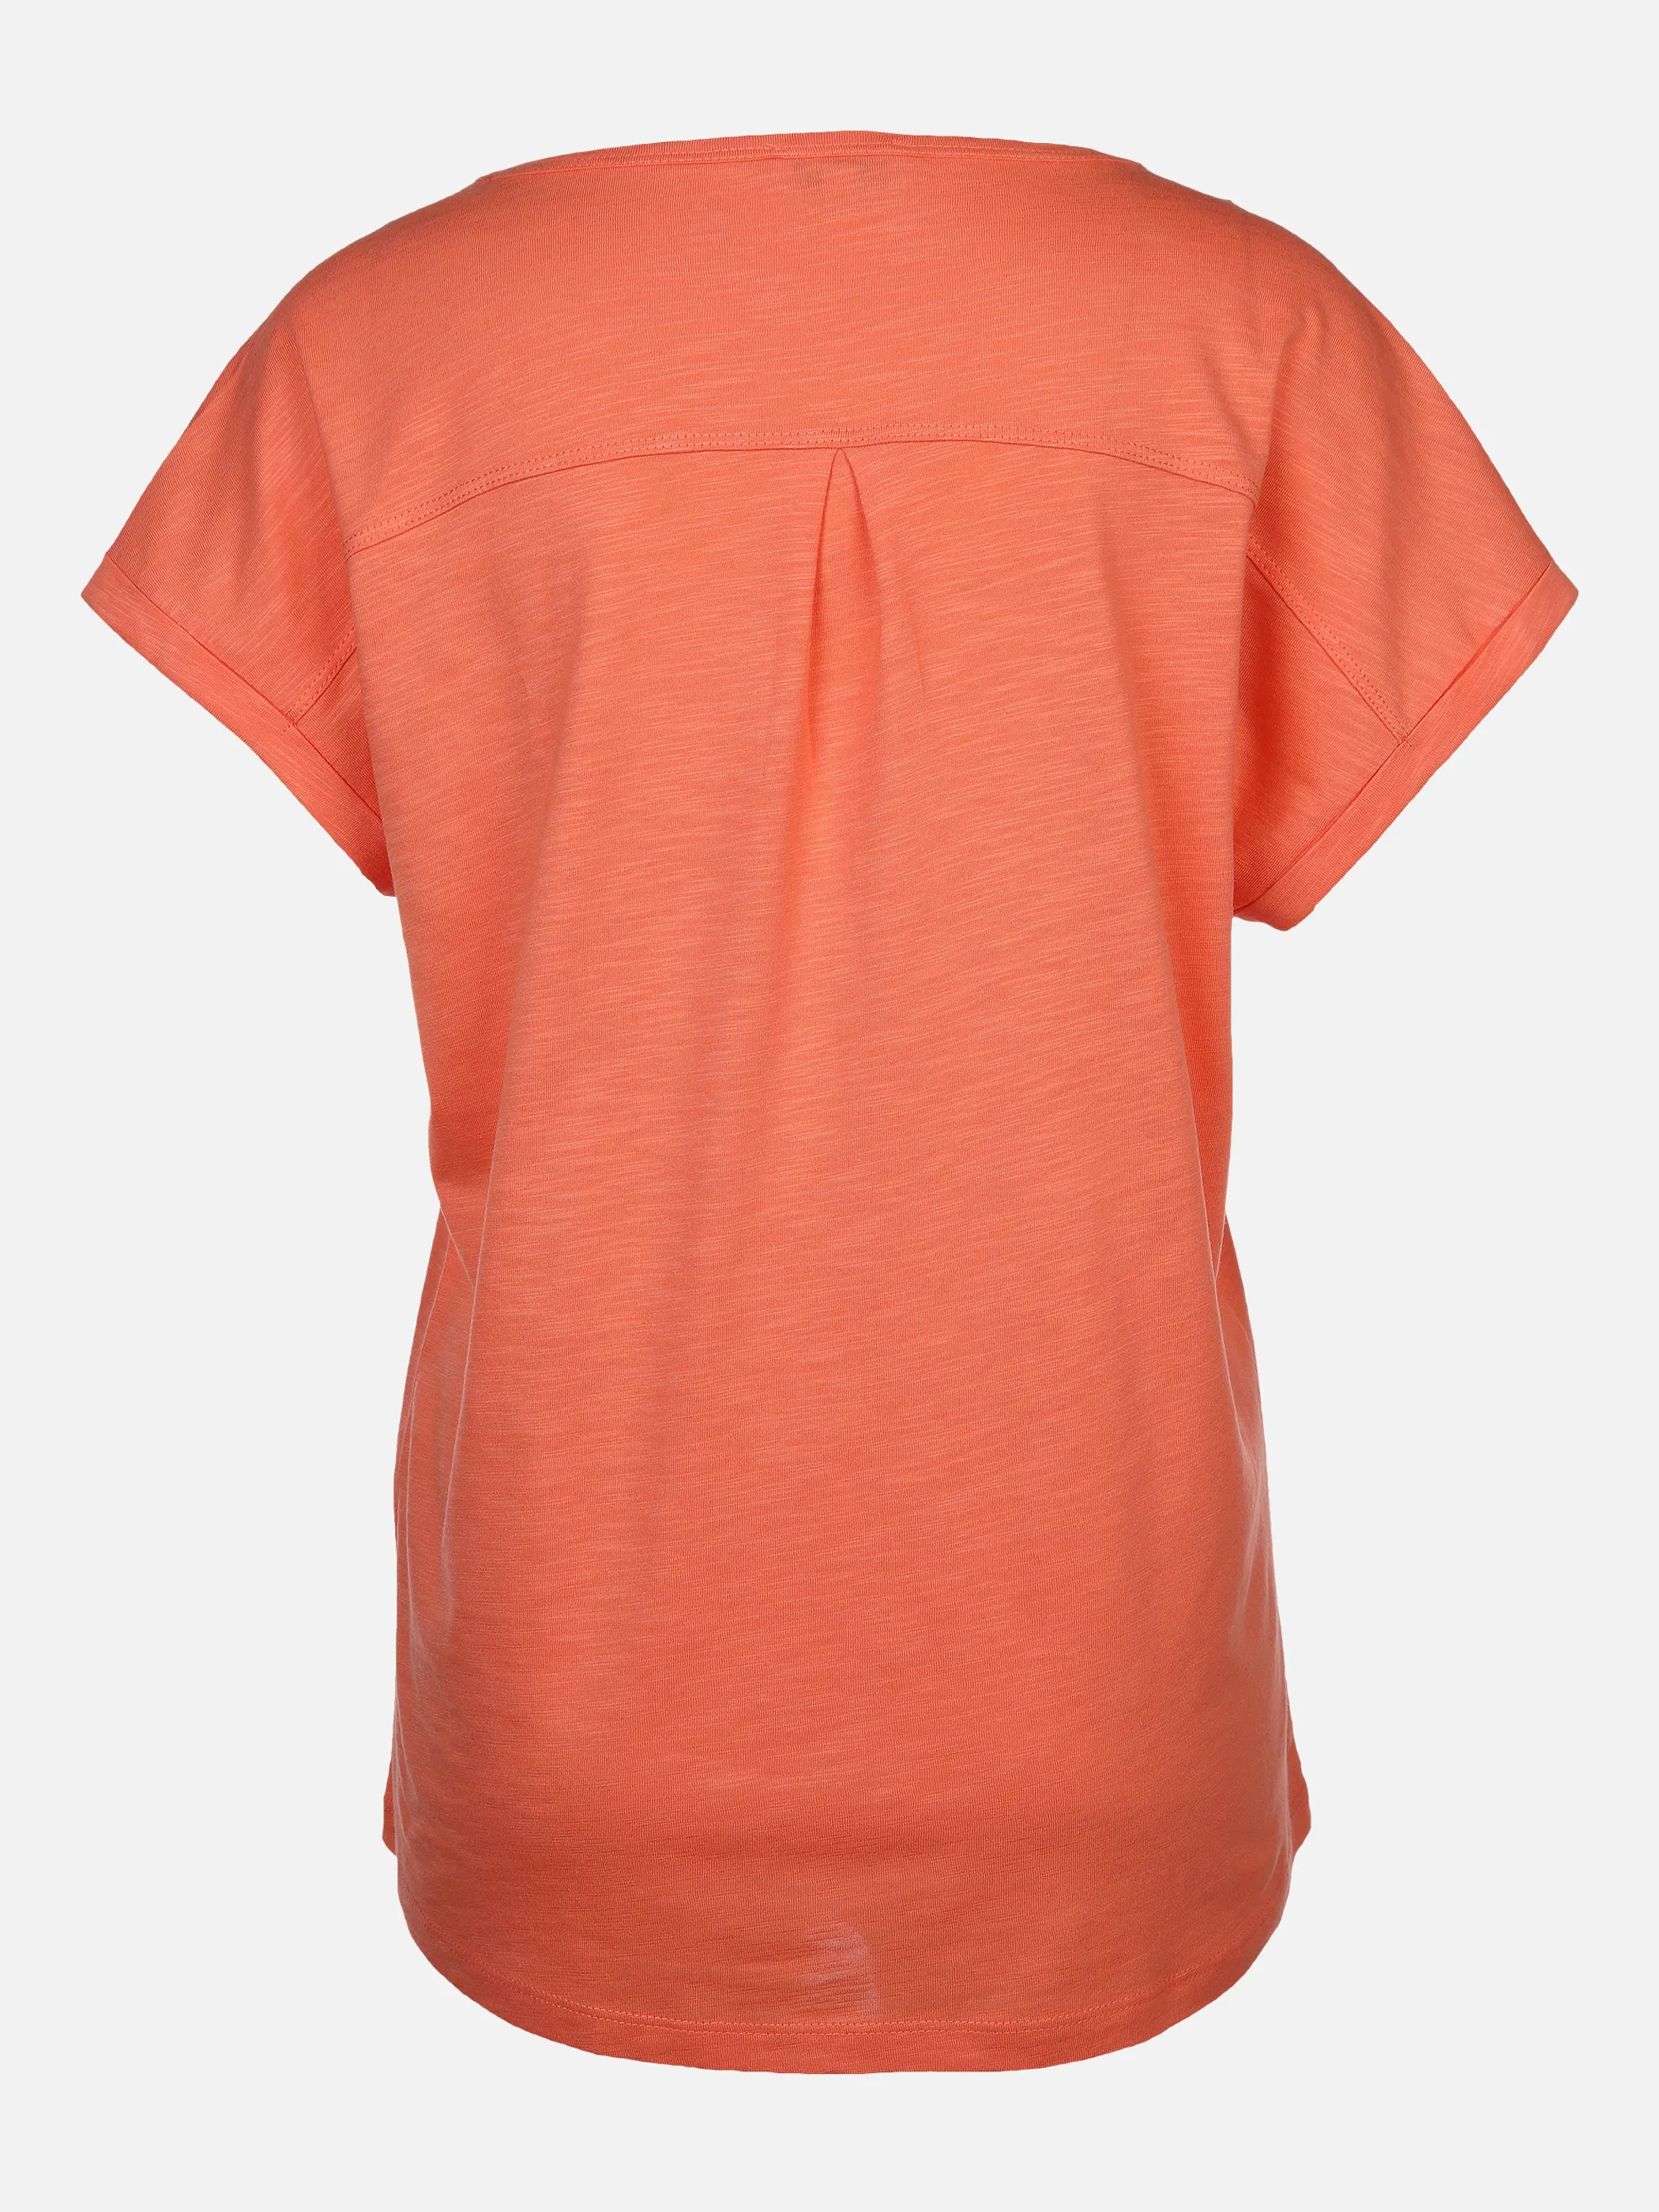 Lisa Tossa Da-T-Shirt m. Frontartwork Orange 877578 KORALLE 2